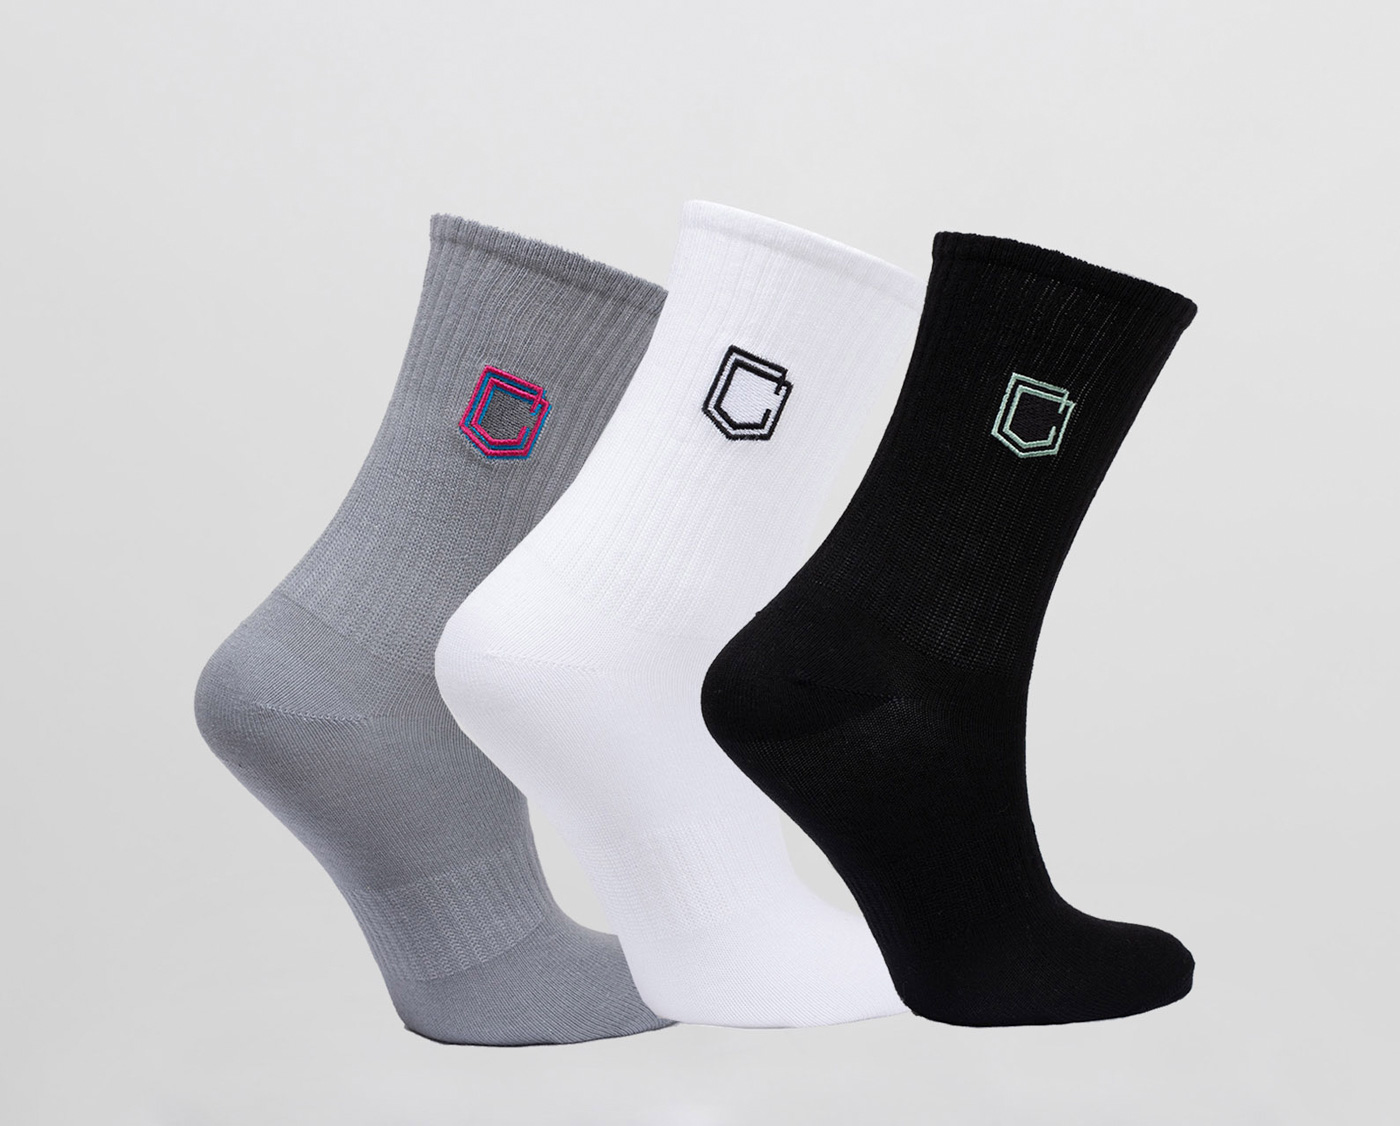 Commencal Lifestyle Socks Pack of 3 – The Floating Pivot